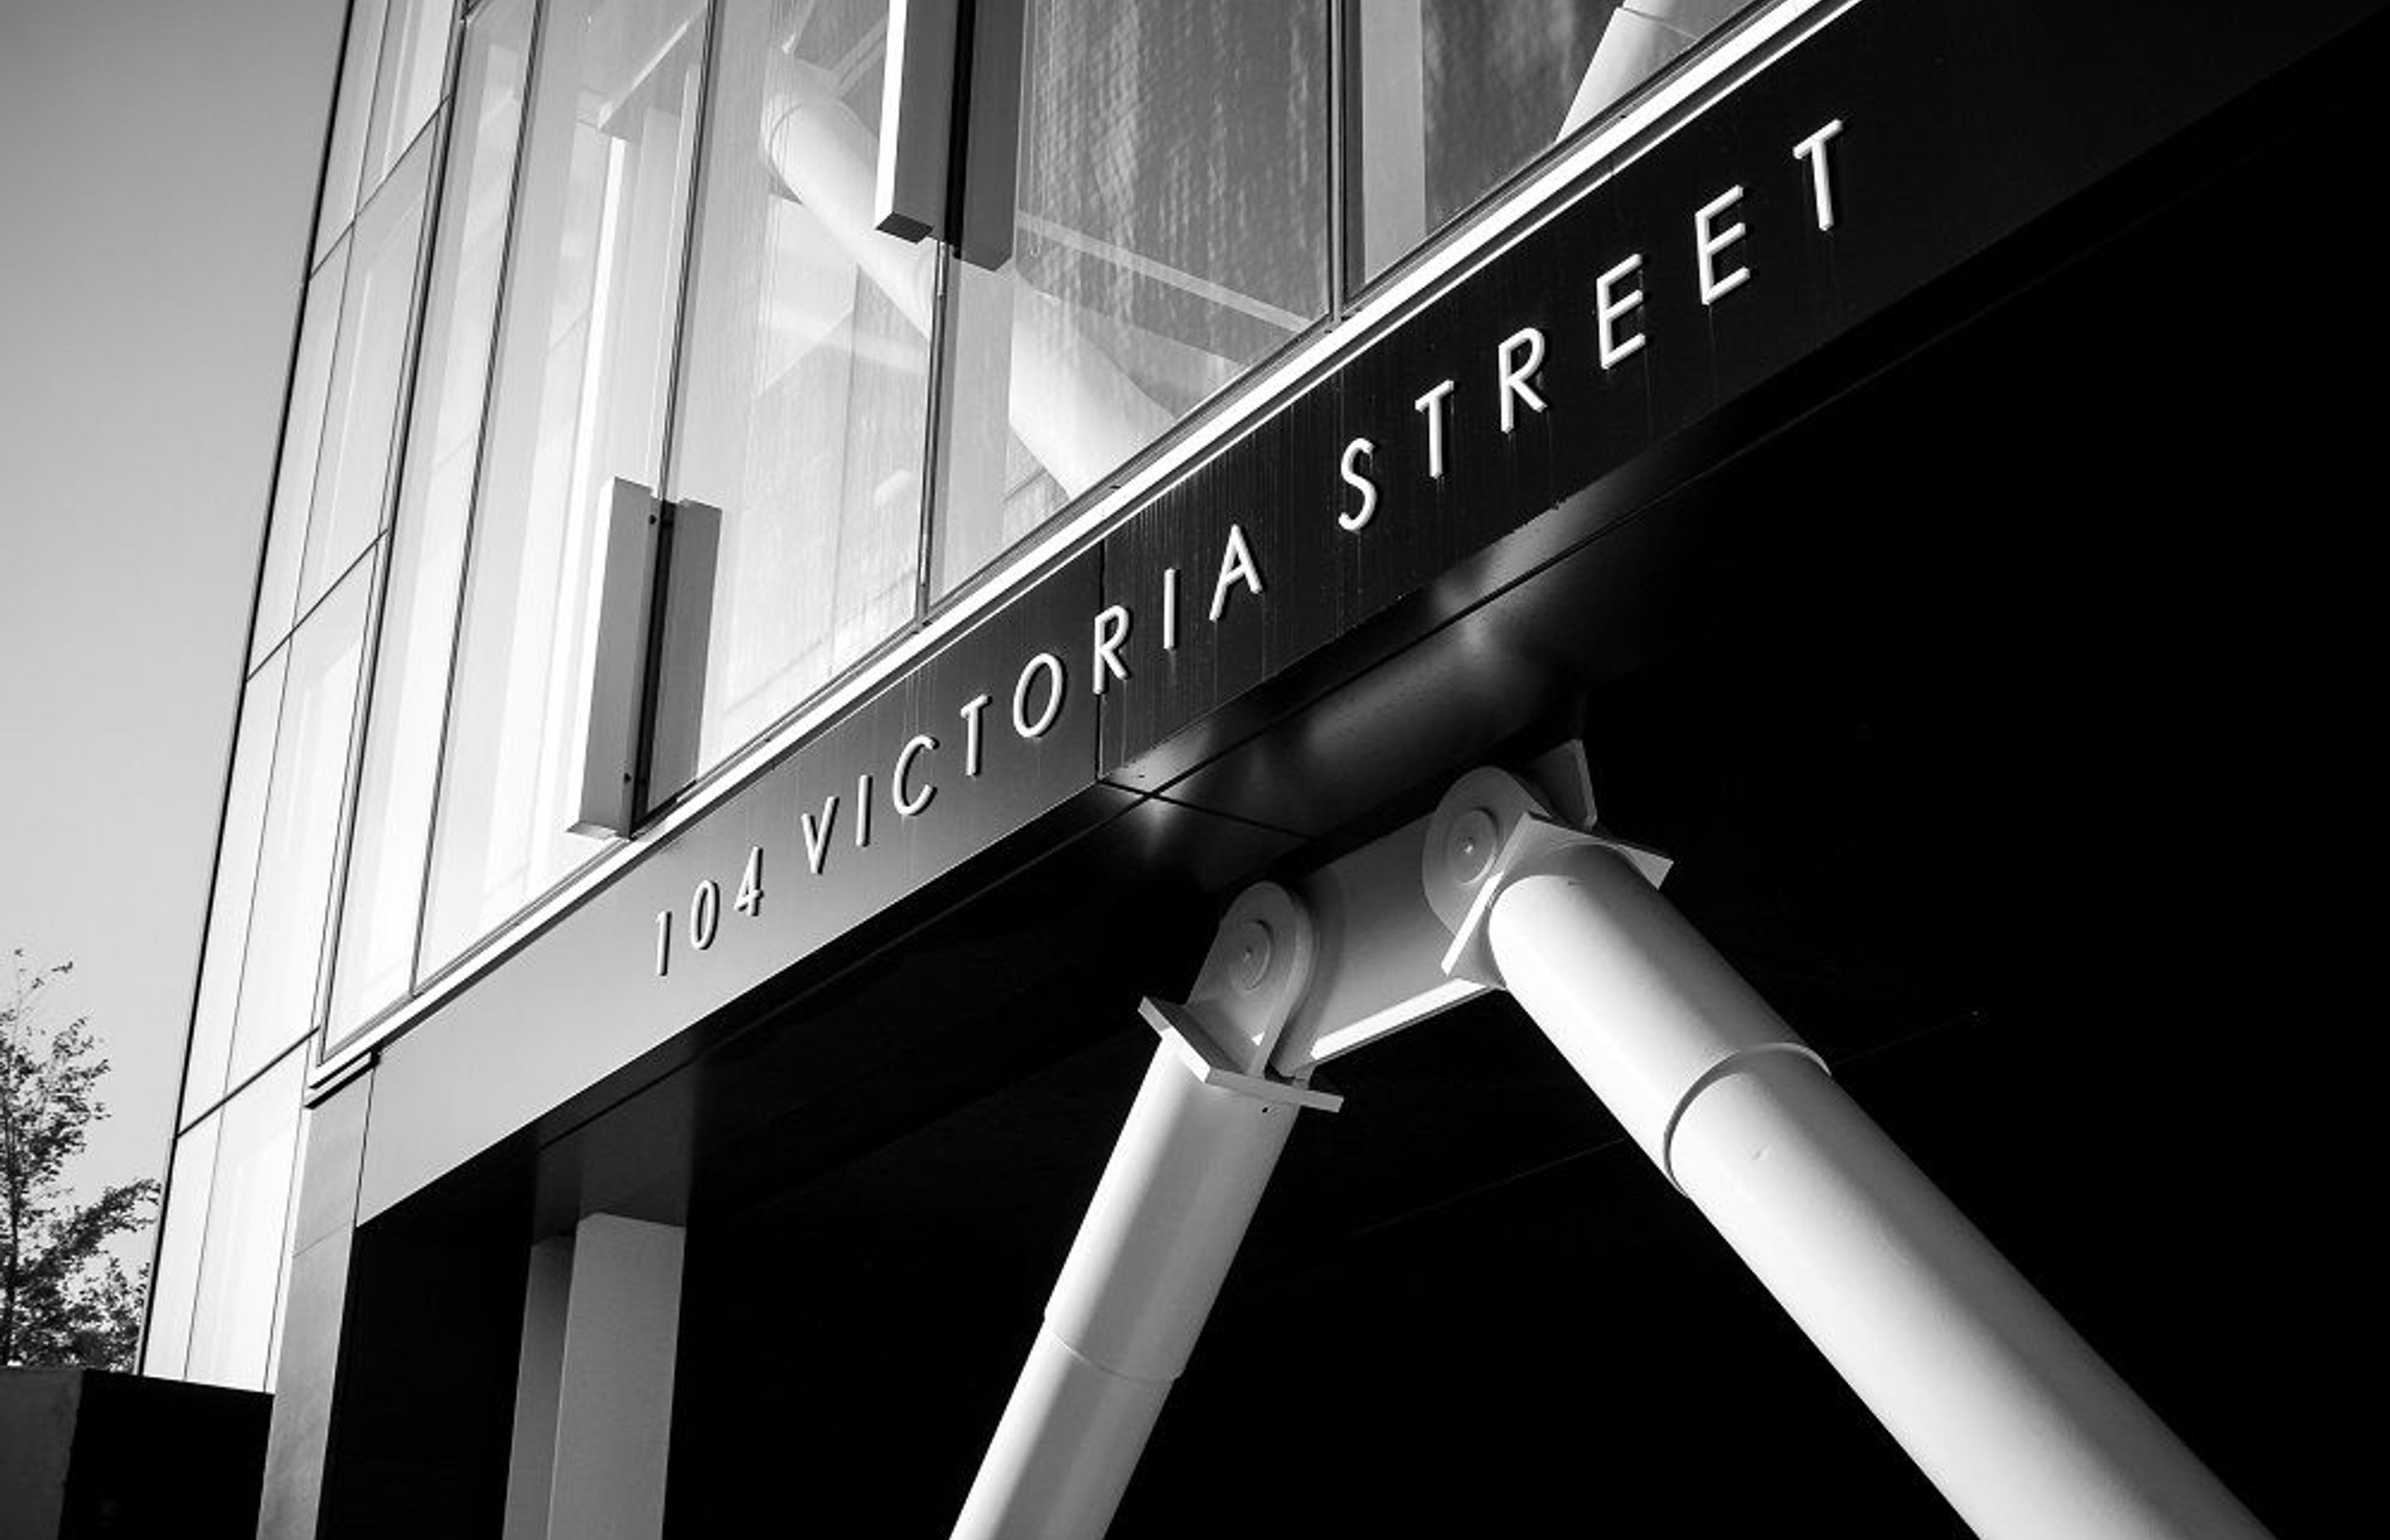 104 Victoria Street - Christchurch